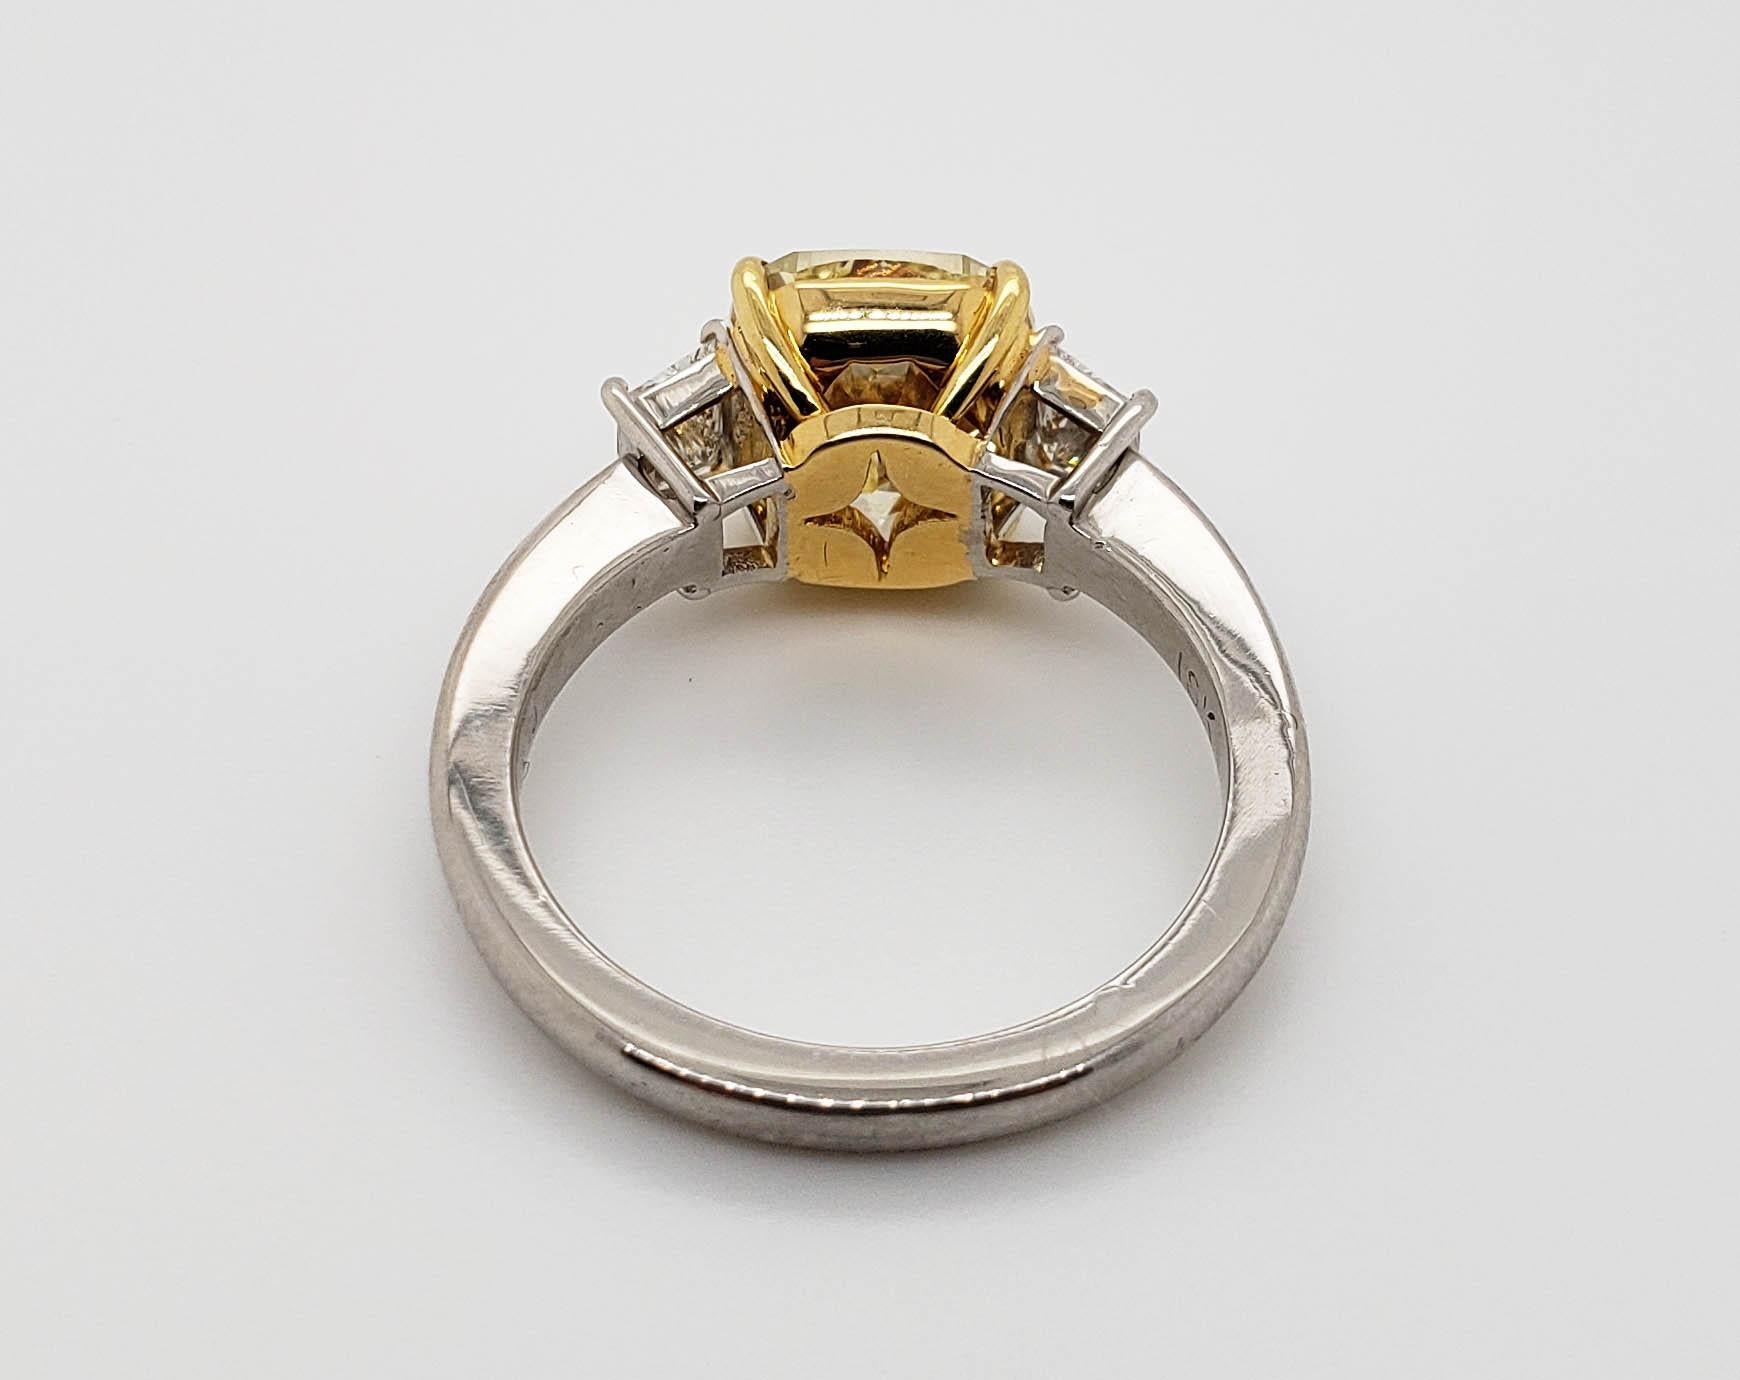 Radiant Cut Scarselli 3.80 carat Fancy Intense Yellow Cushion Cut Diamond Engagement Ring 